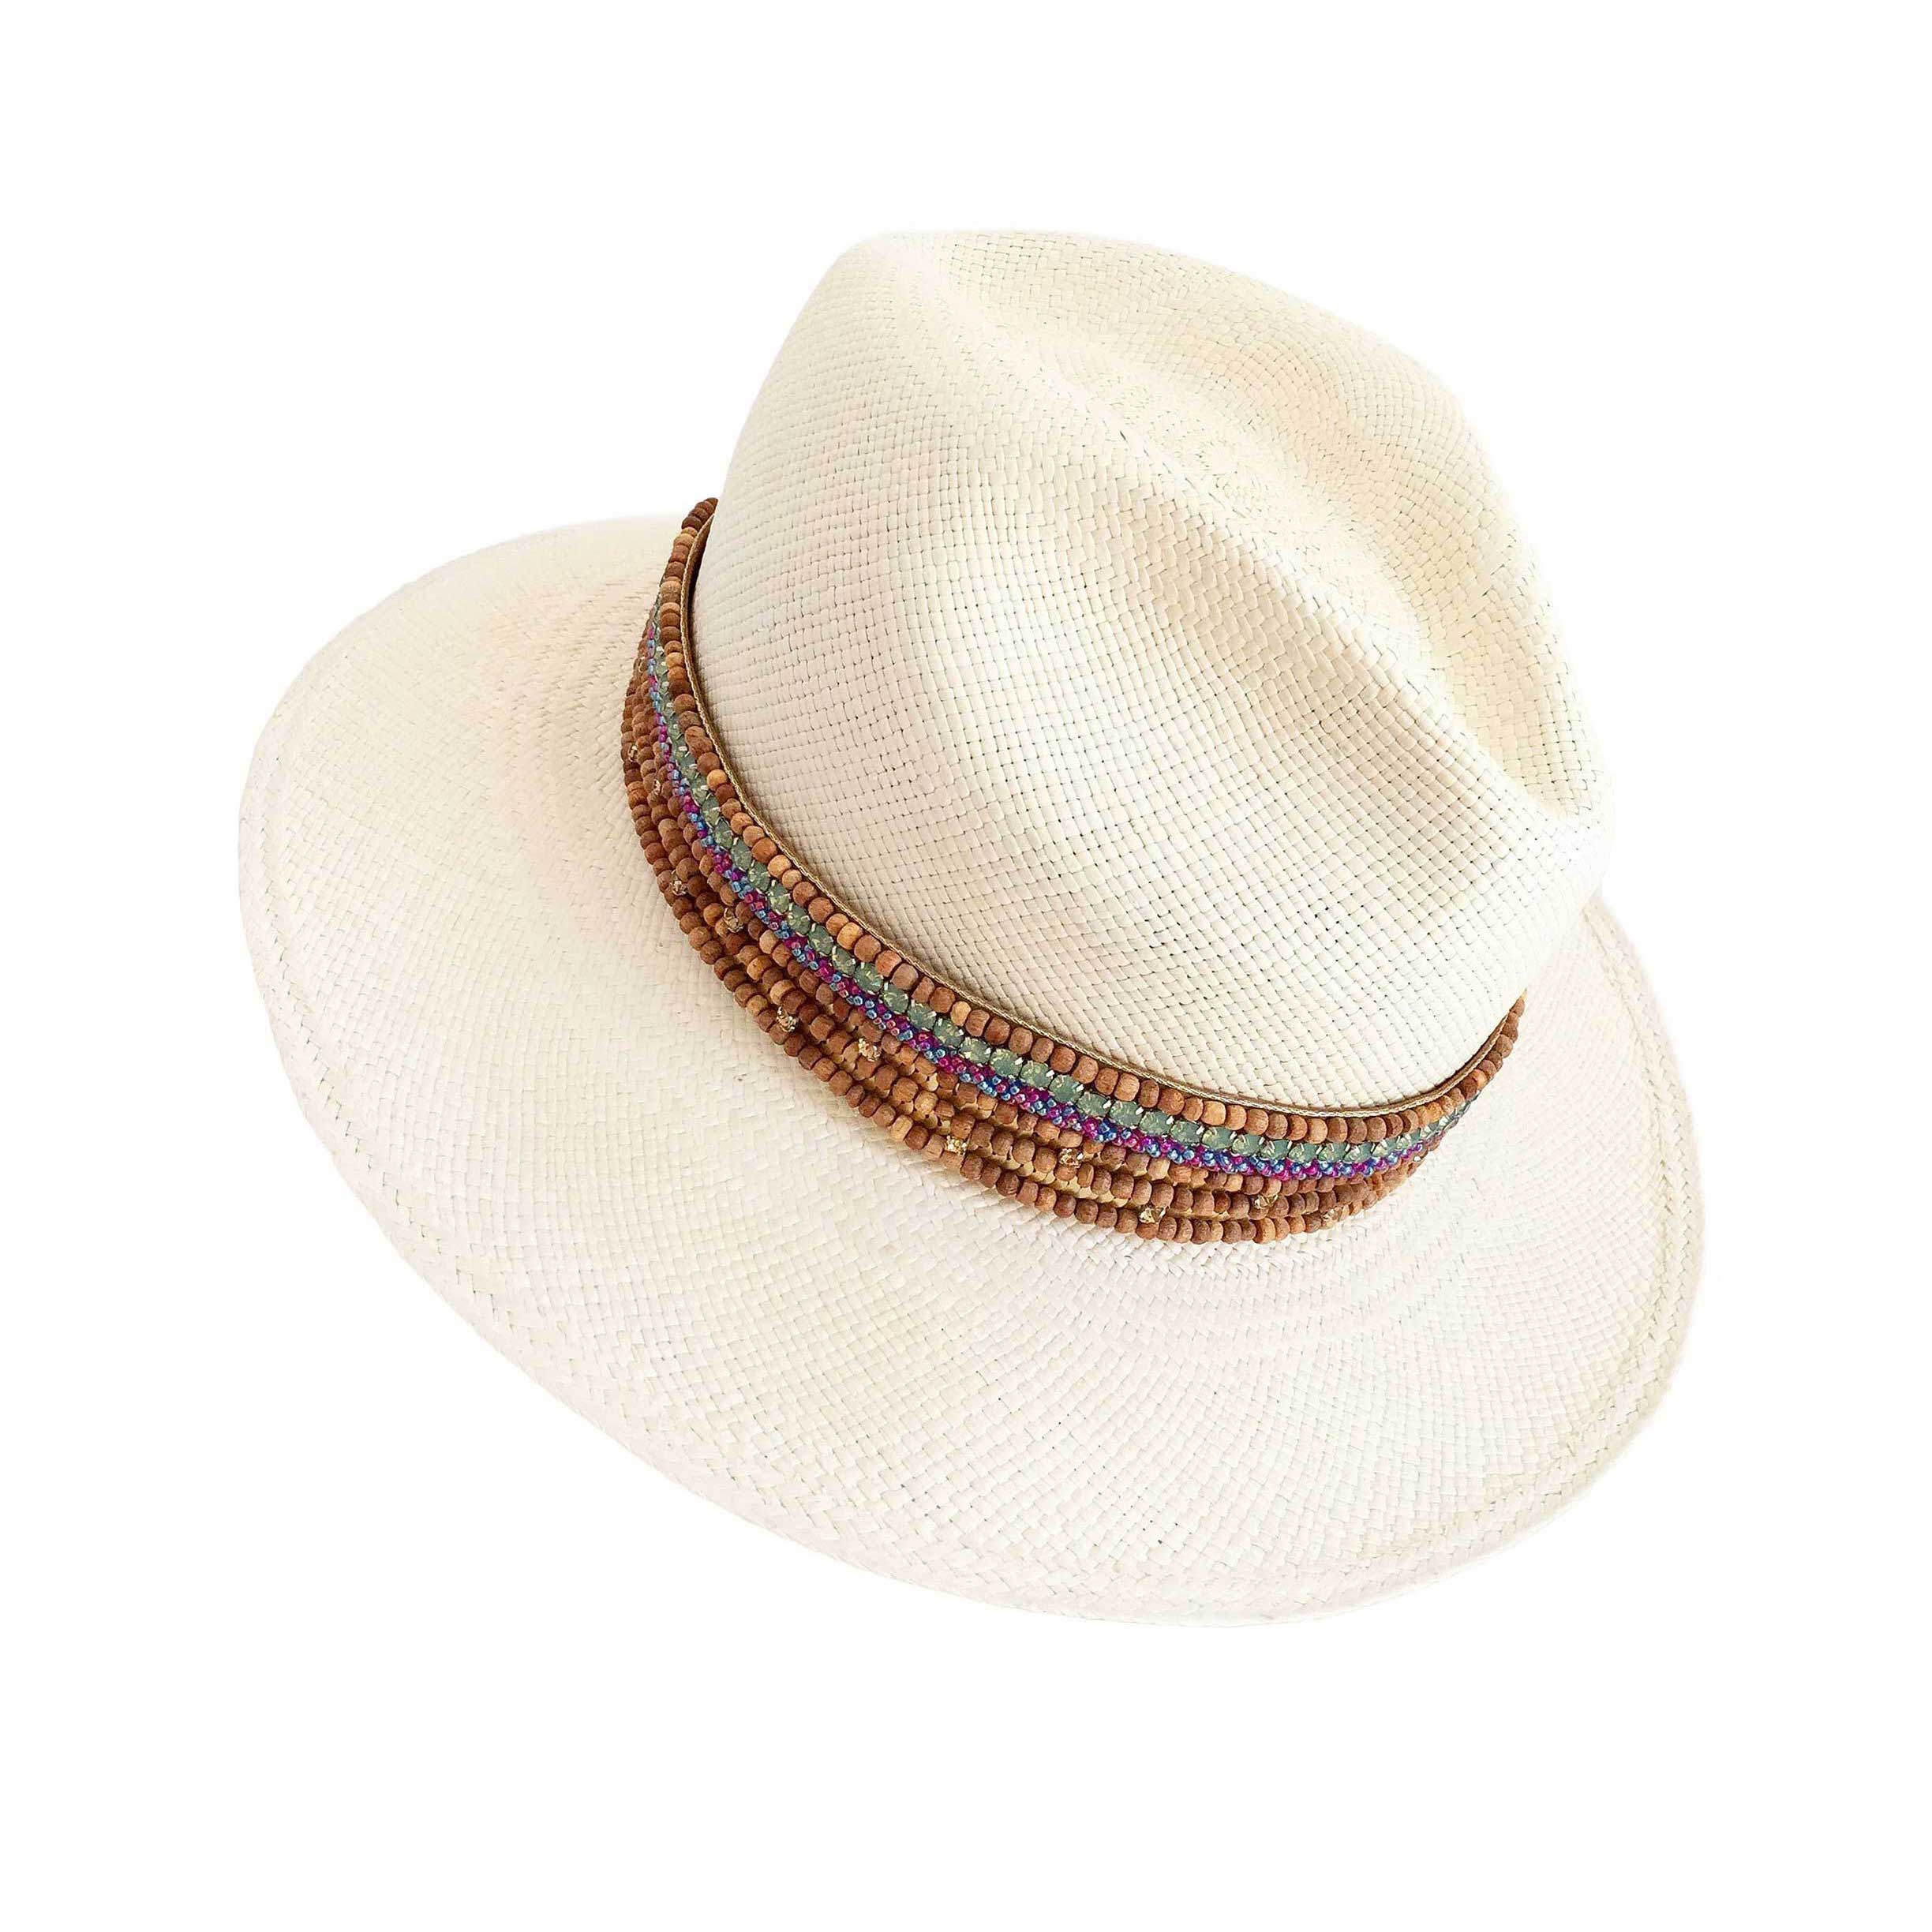 The ANACAPRI Beaded Pearl Panama Hat